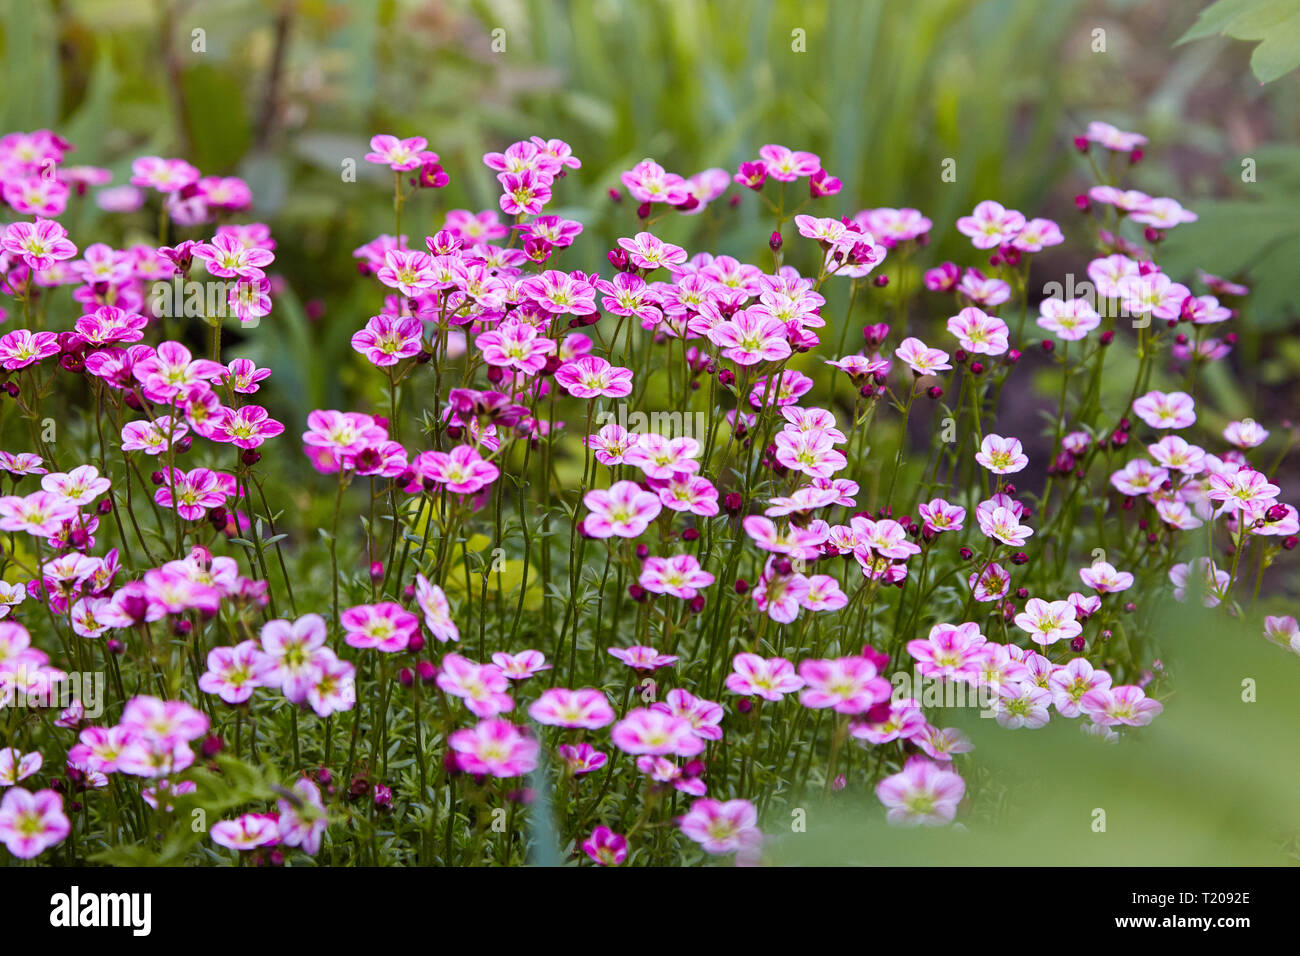 Pink saxifrage Saksifraga Arendsii growing in a garden.  Selective focus. Stock Photo